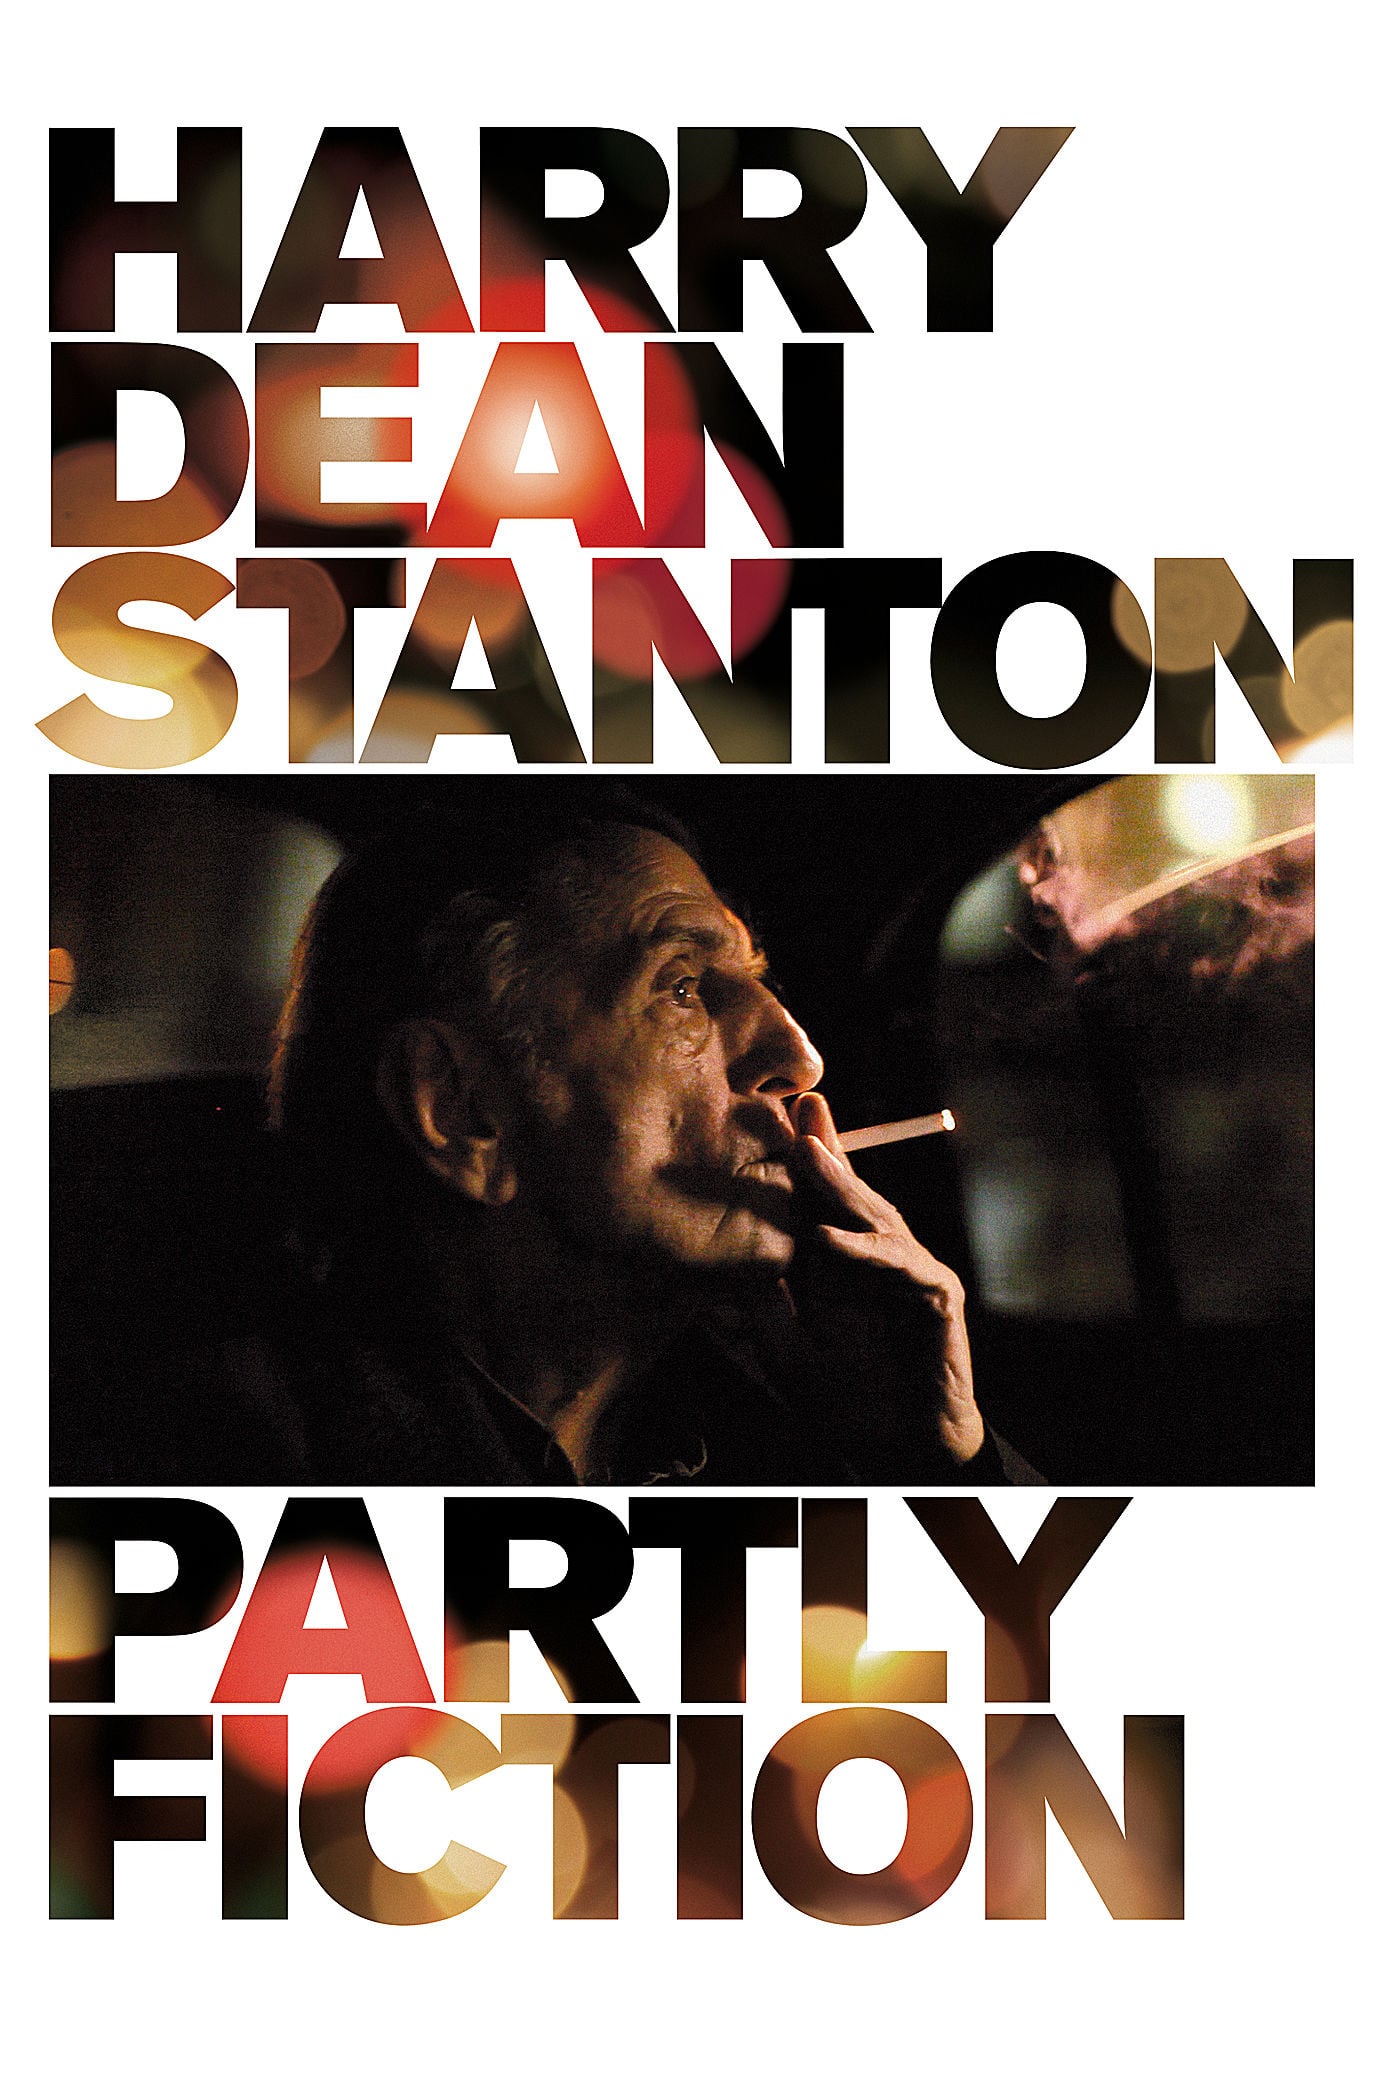 Caratula de HARRY DEAN STANTON PARTLY FICTION (Harry Dean Stanton: Partly Fiction) 